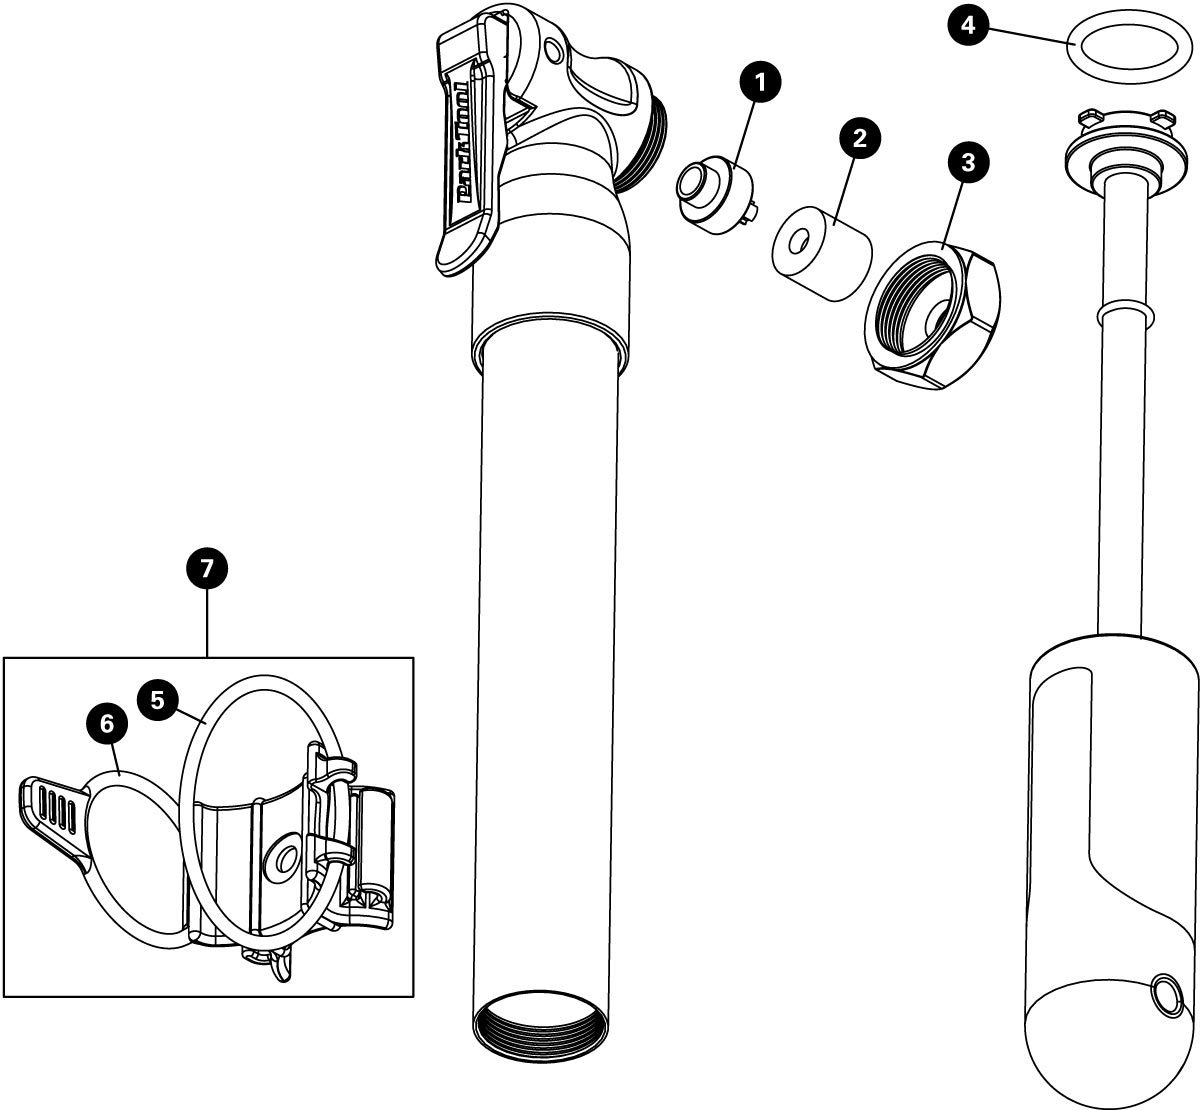 Parts diagram for PMP-4 Half-Pint Mini Pump, enlarged